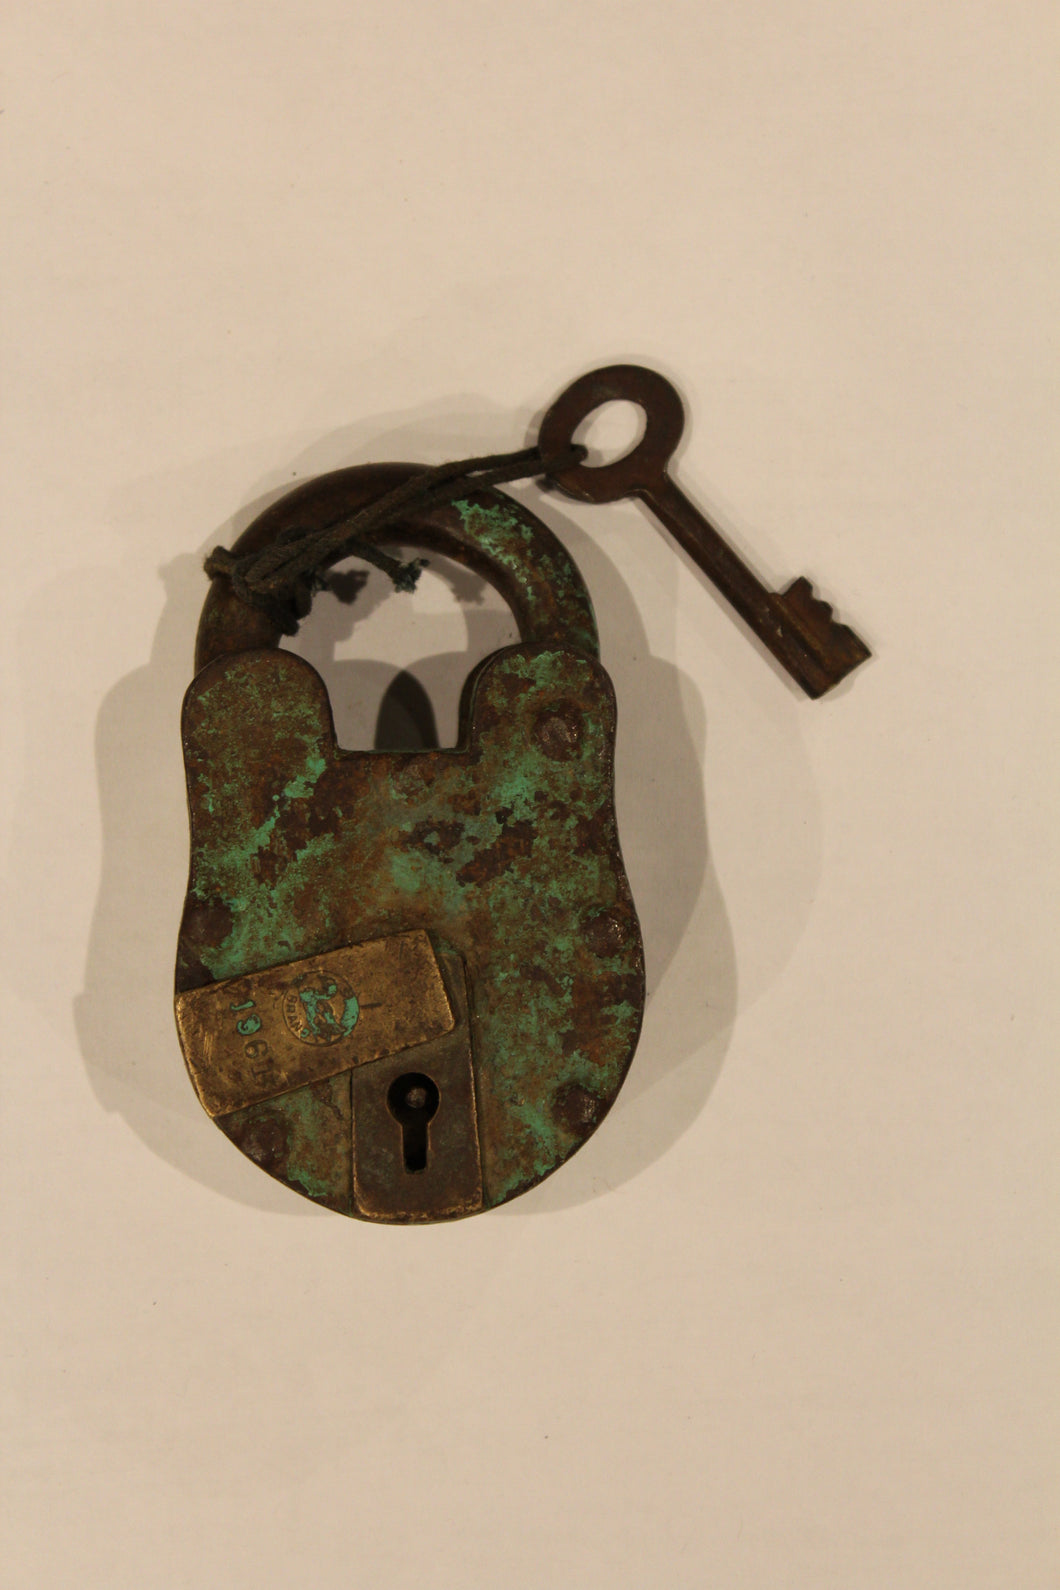 Antique Lock and Key